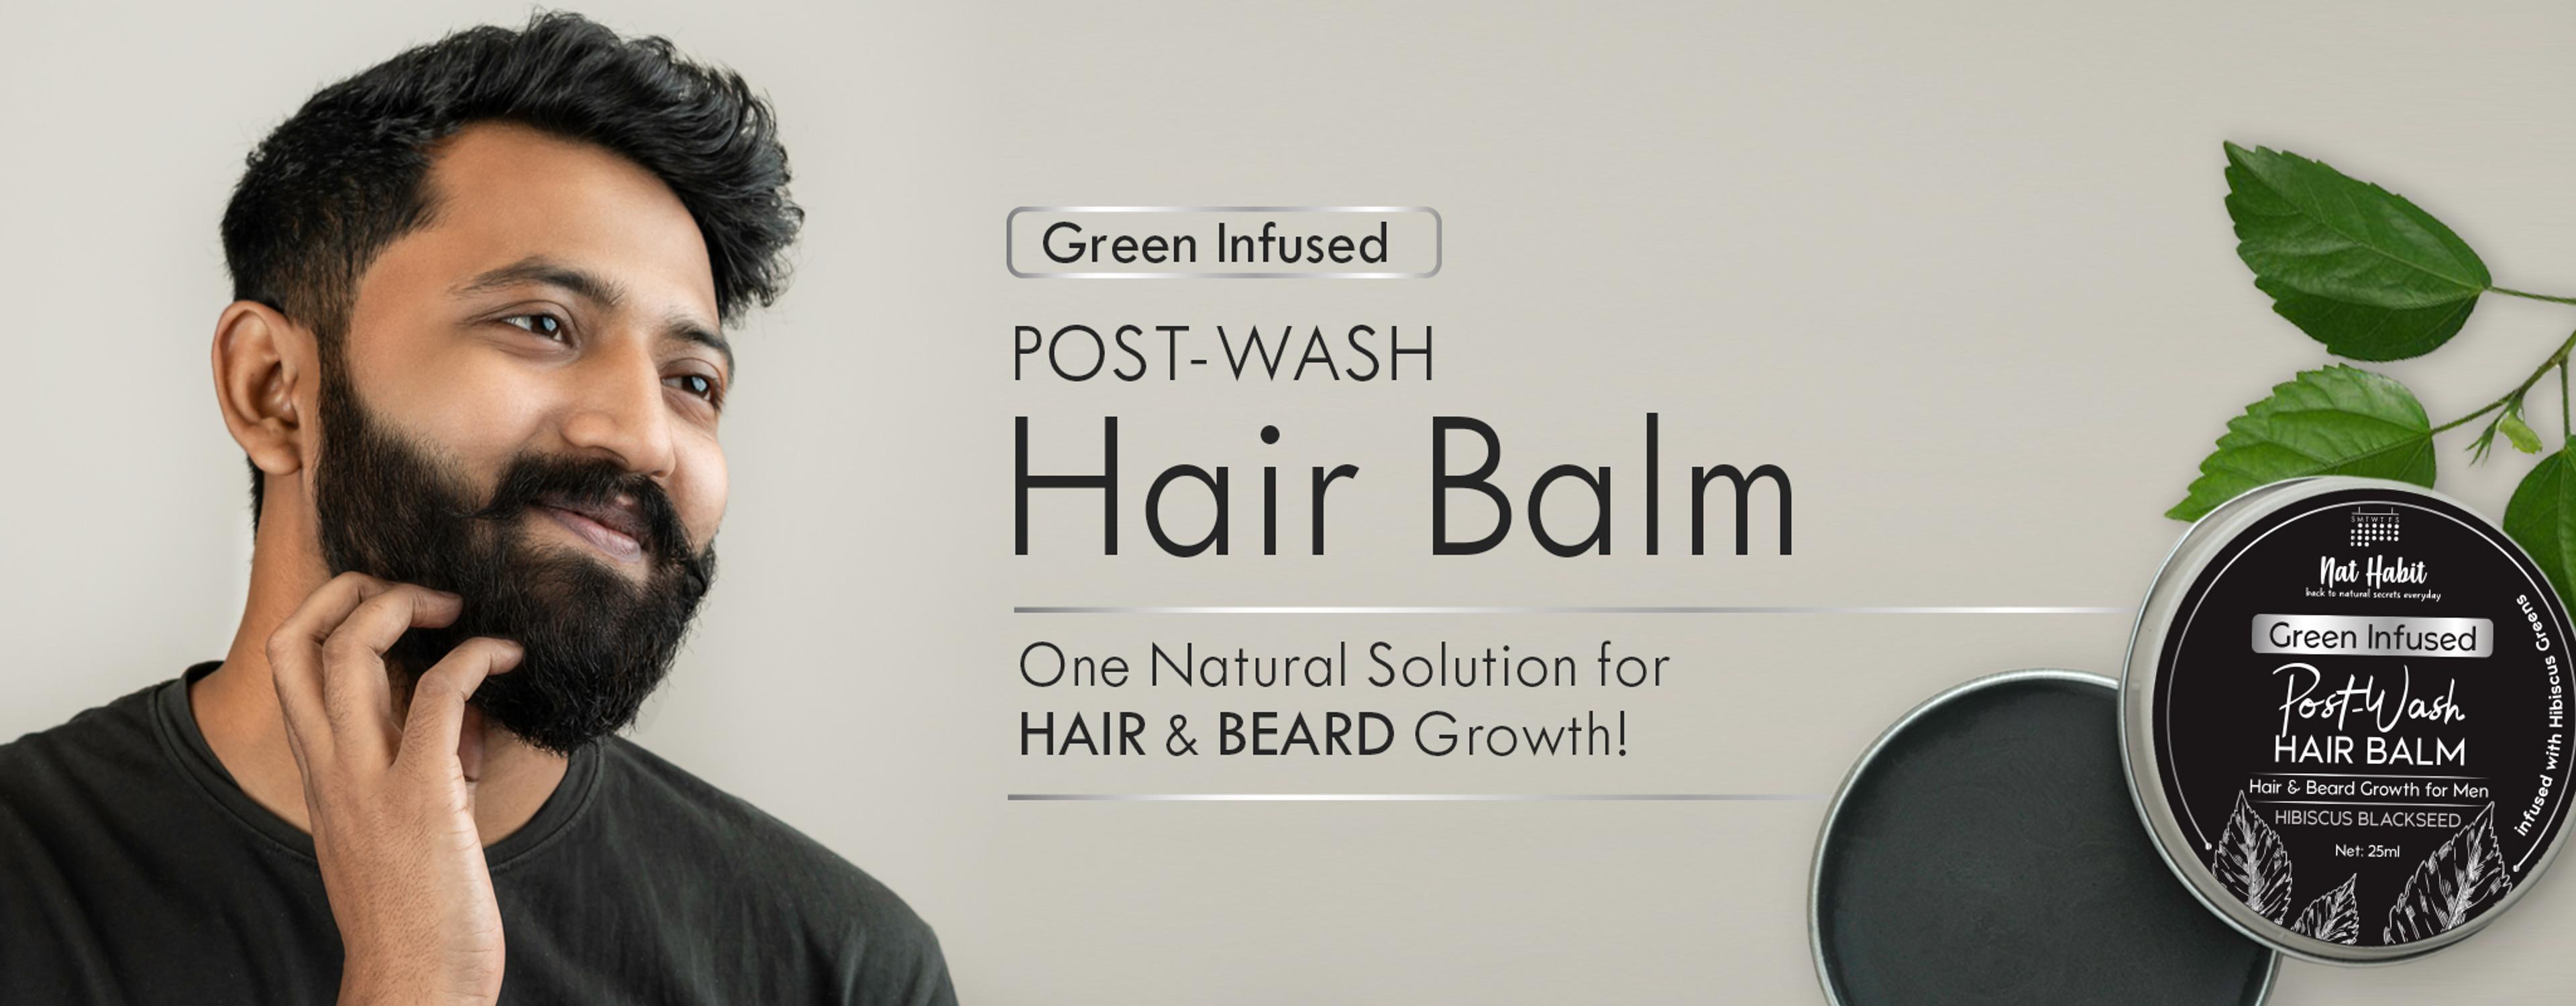 men_s-hair-balm-banner-website